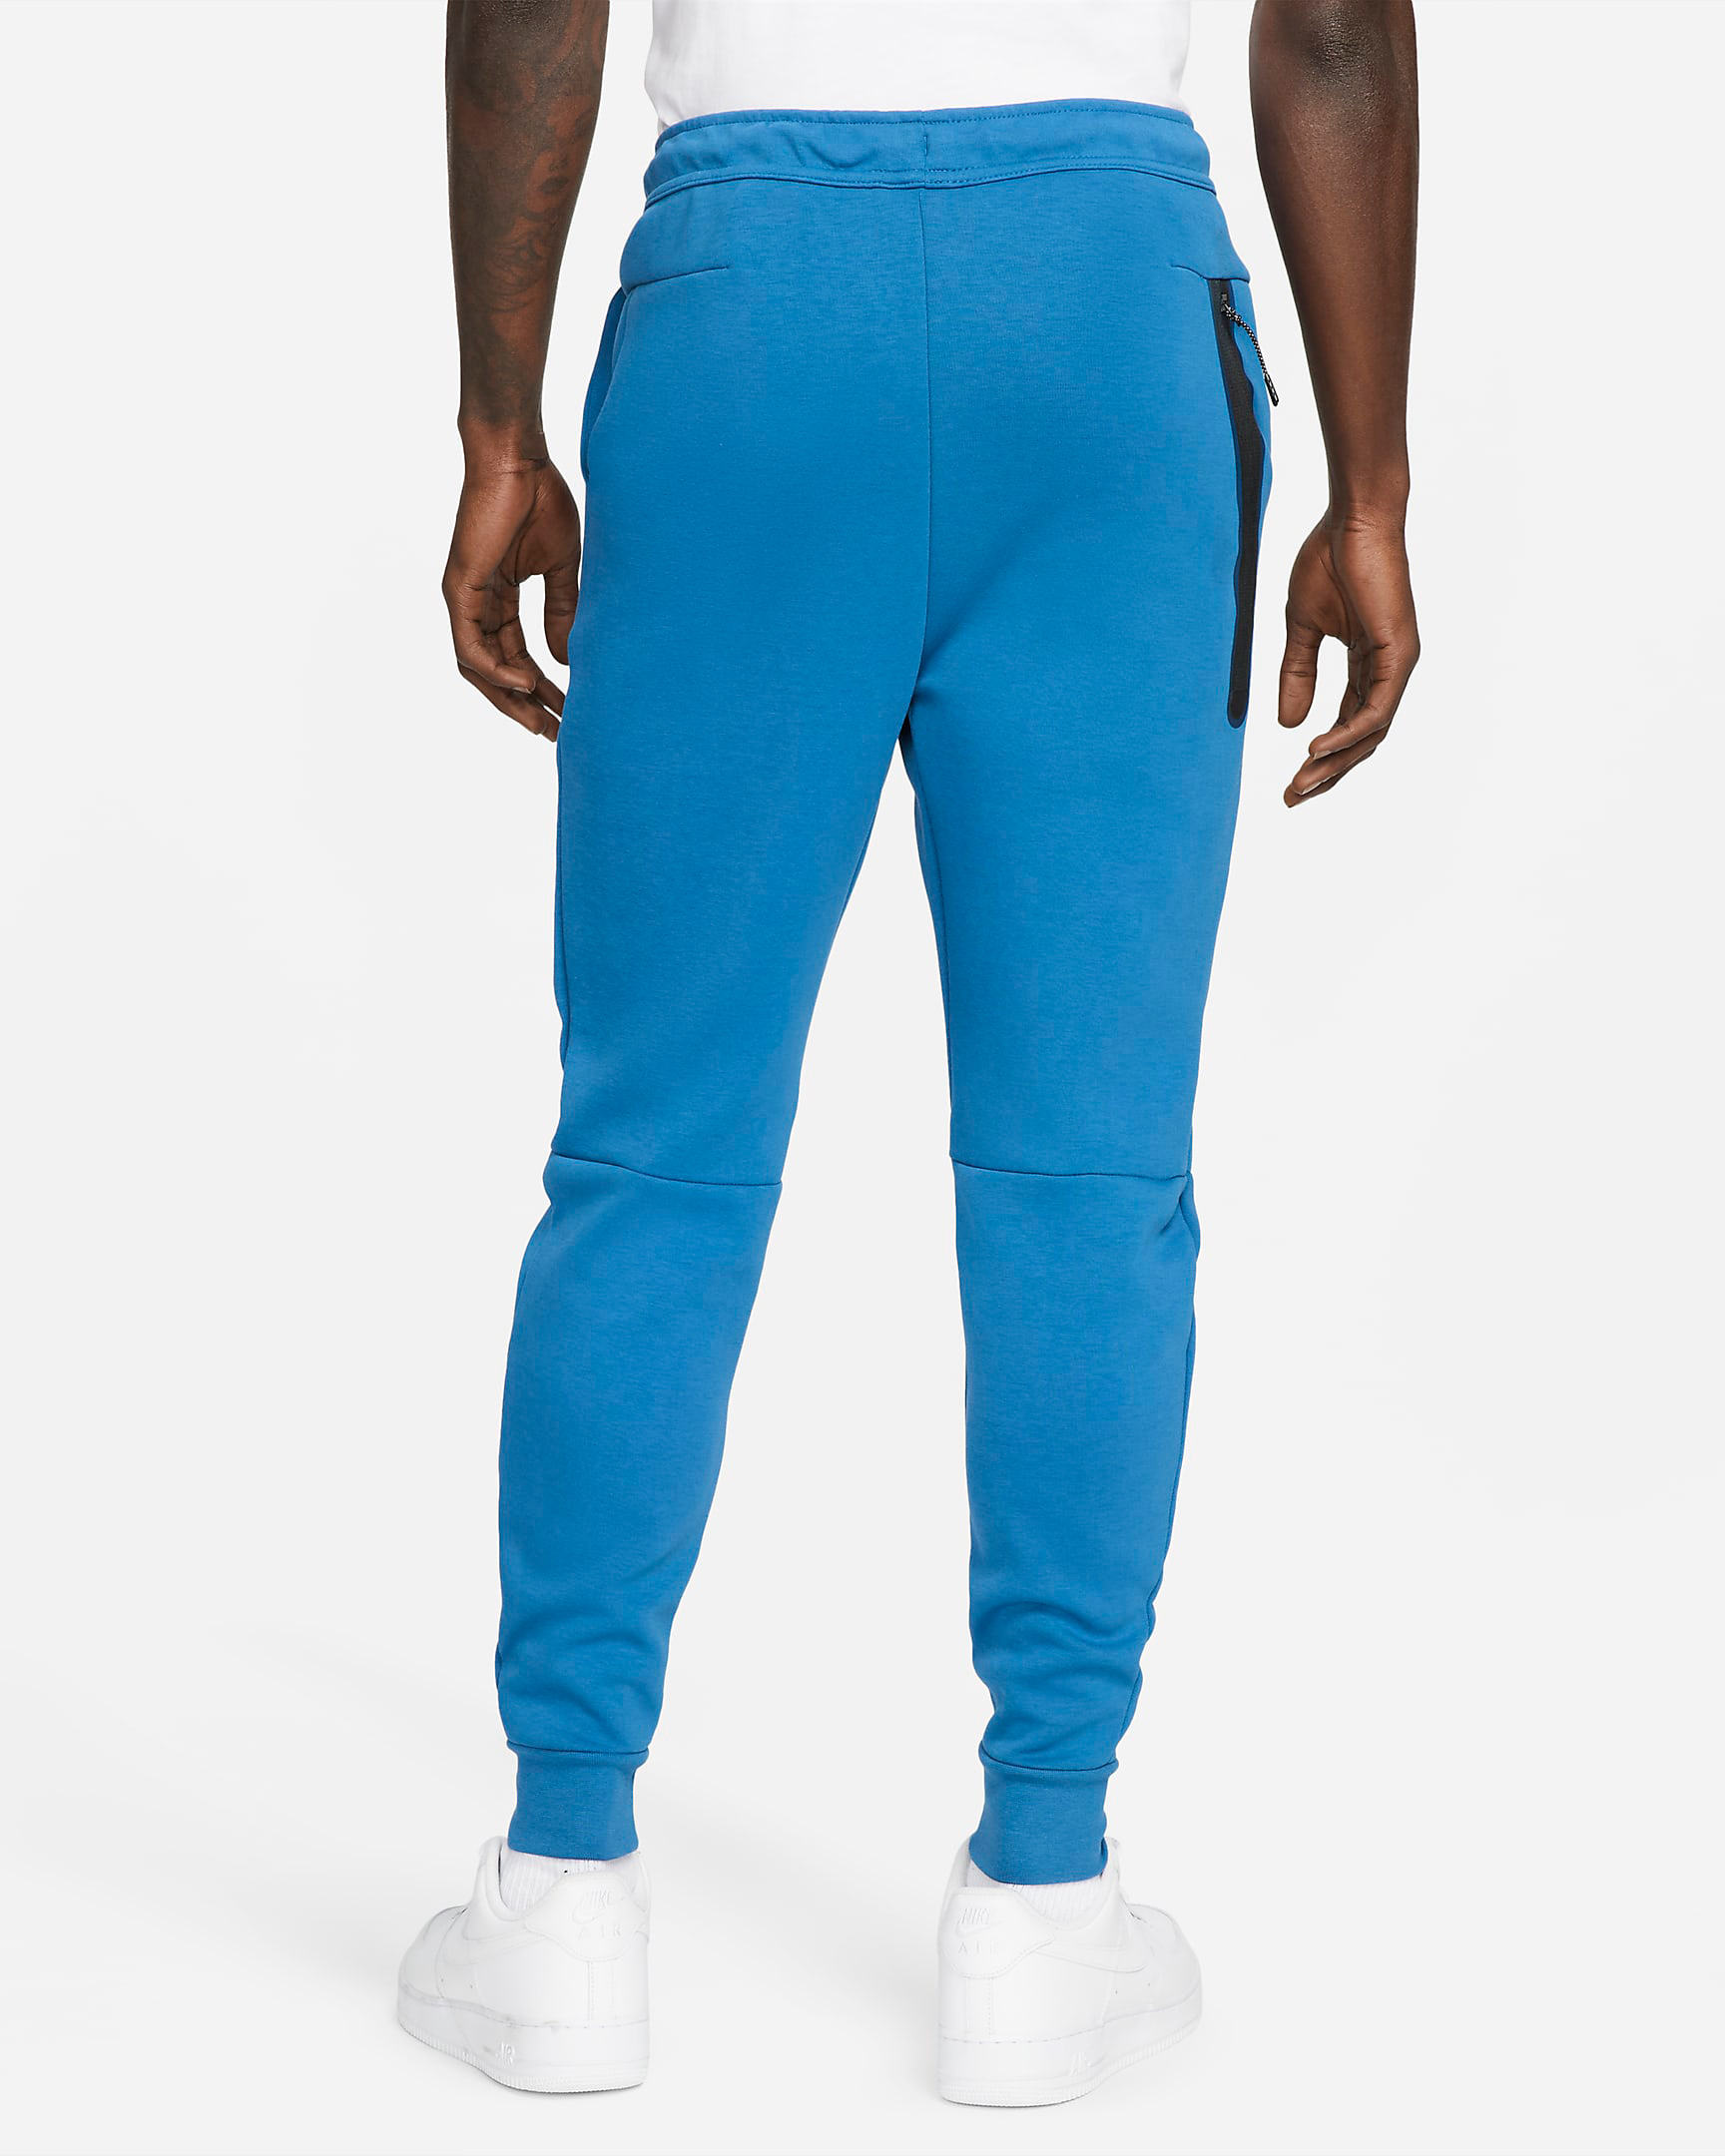 nike-tech-fleece-joggers-pants-dark-marina-blue-2